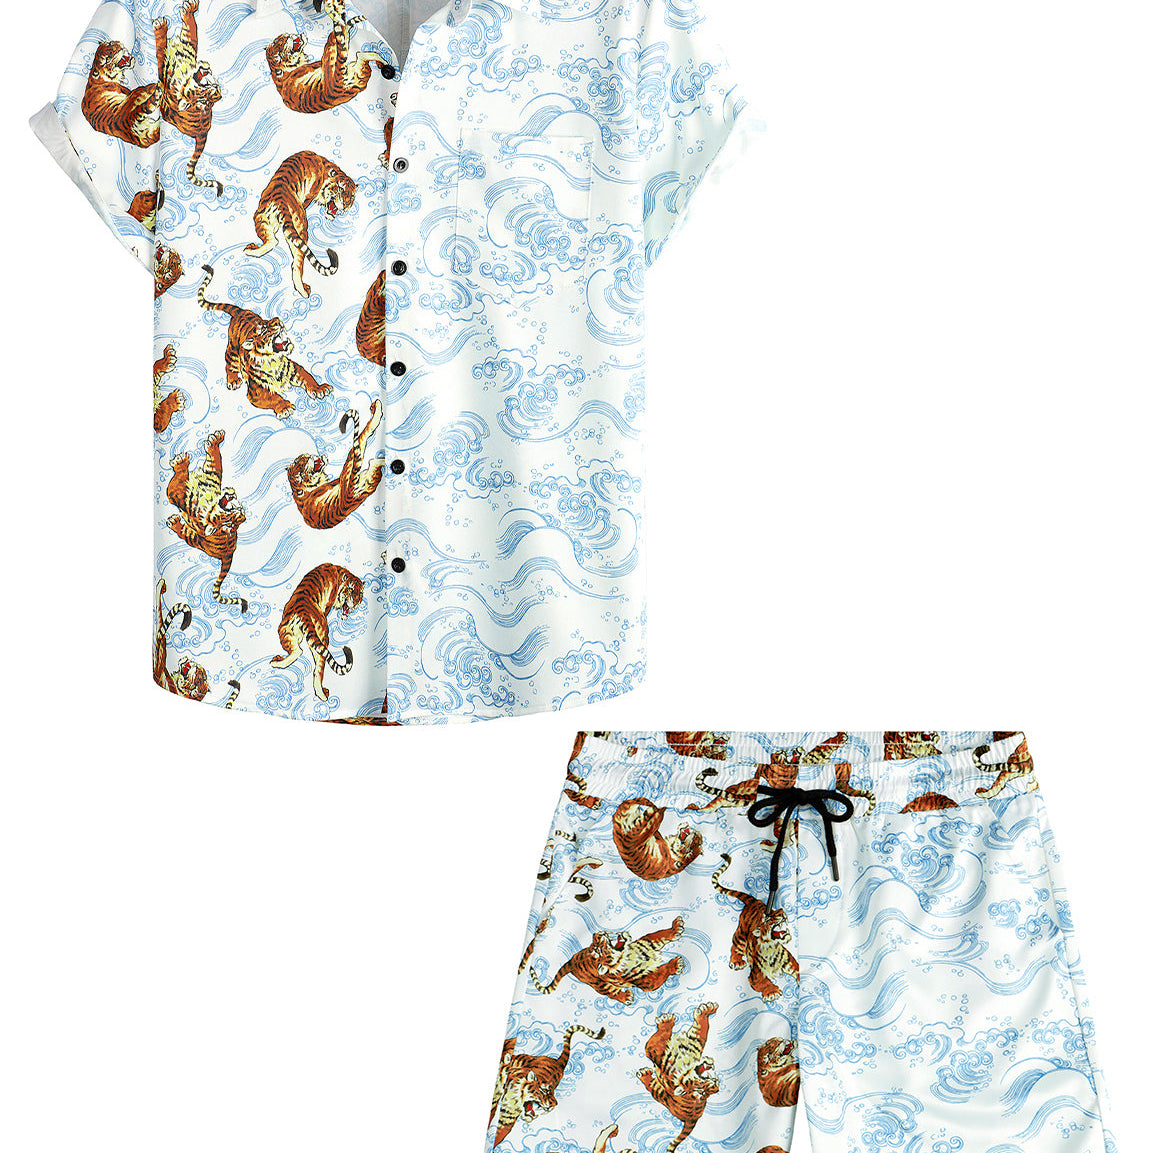 Men's Tiger And Waves Print Animal Patchwork Pocket Shirt & Shorts Set